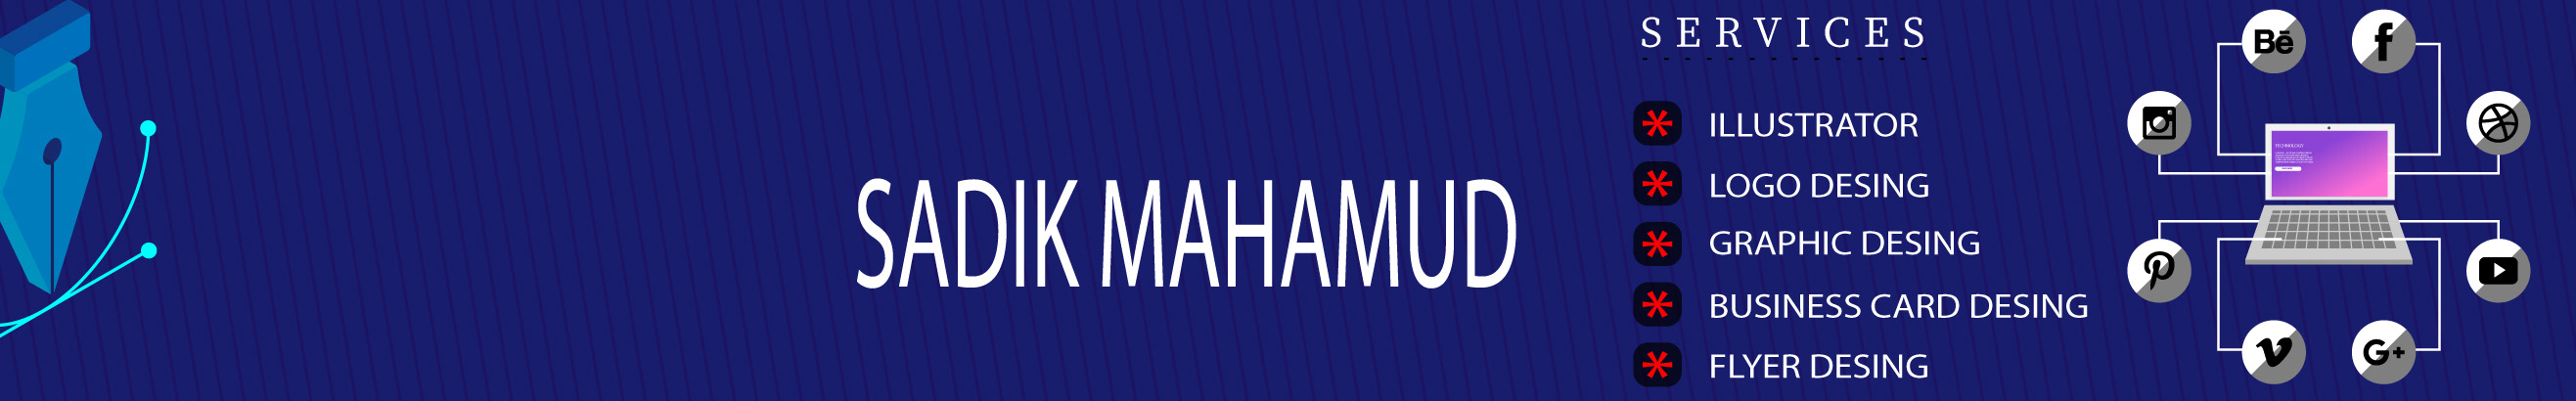 Sadik Mahamud's profile banner